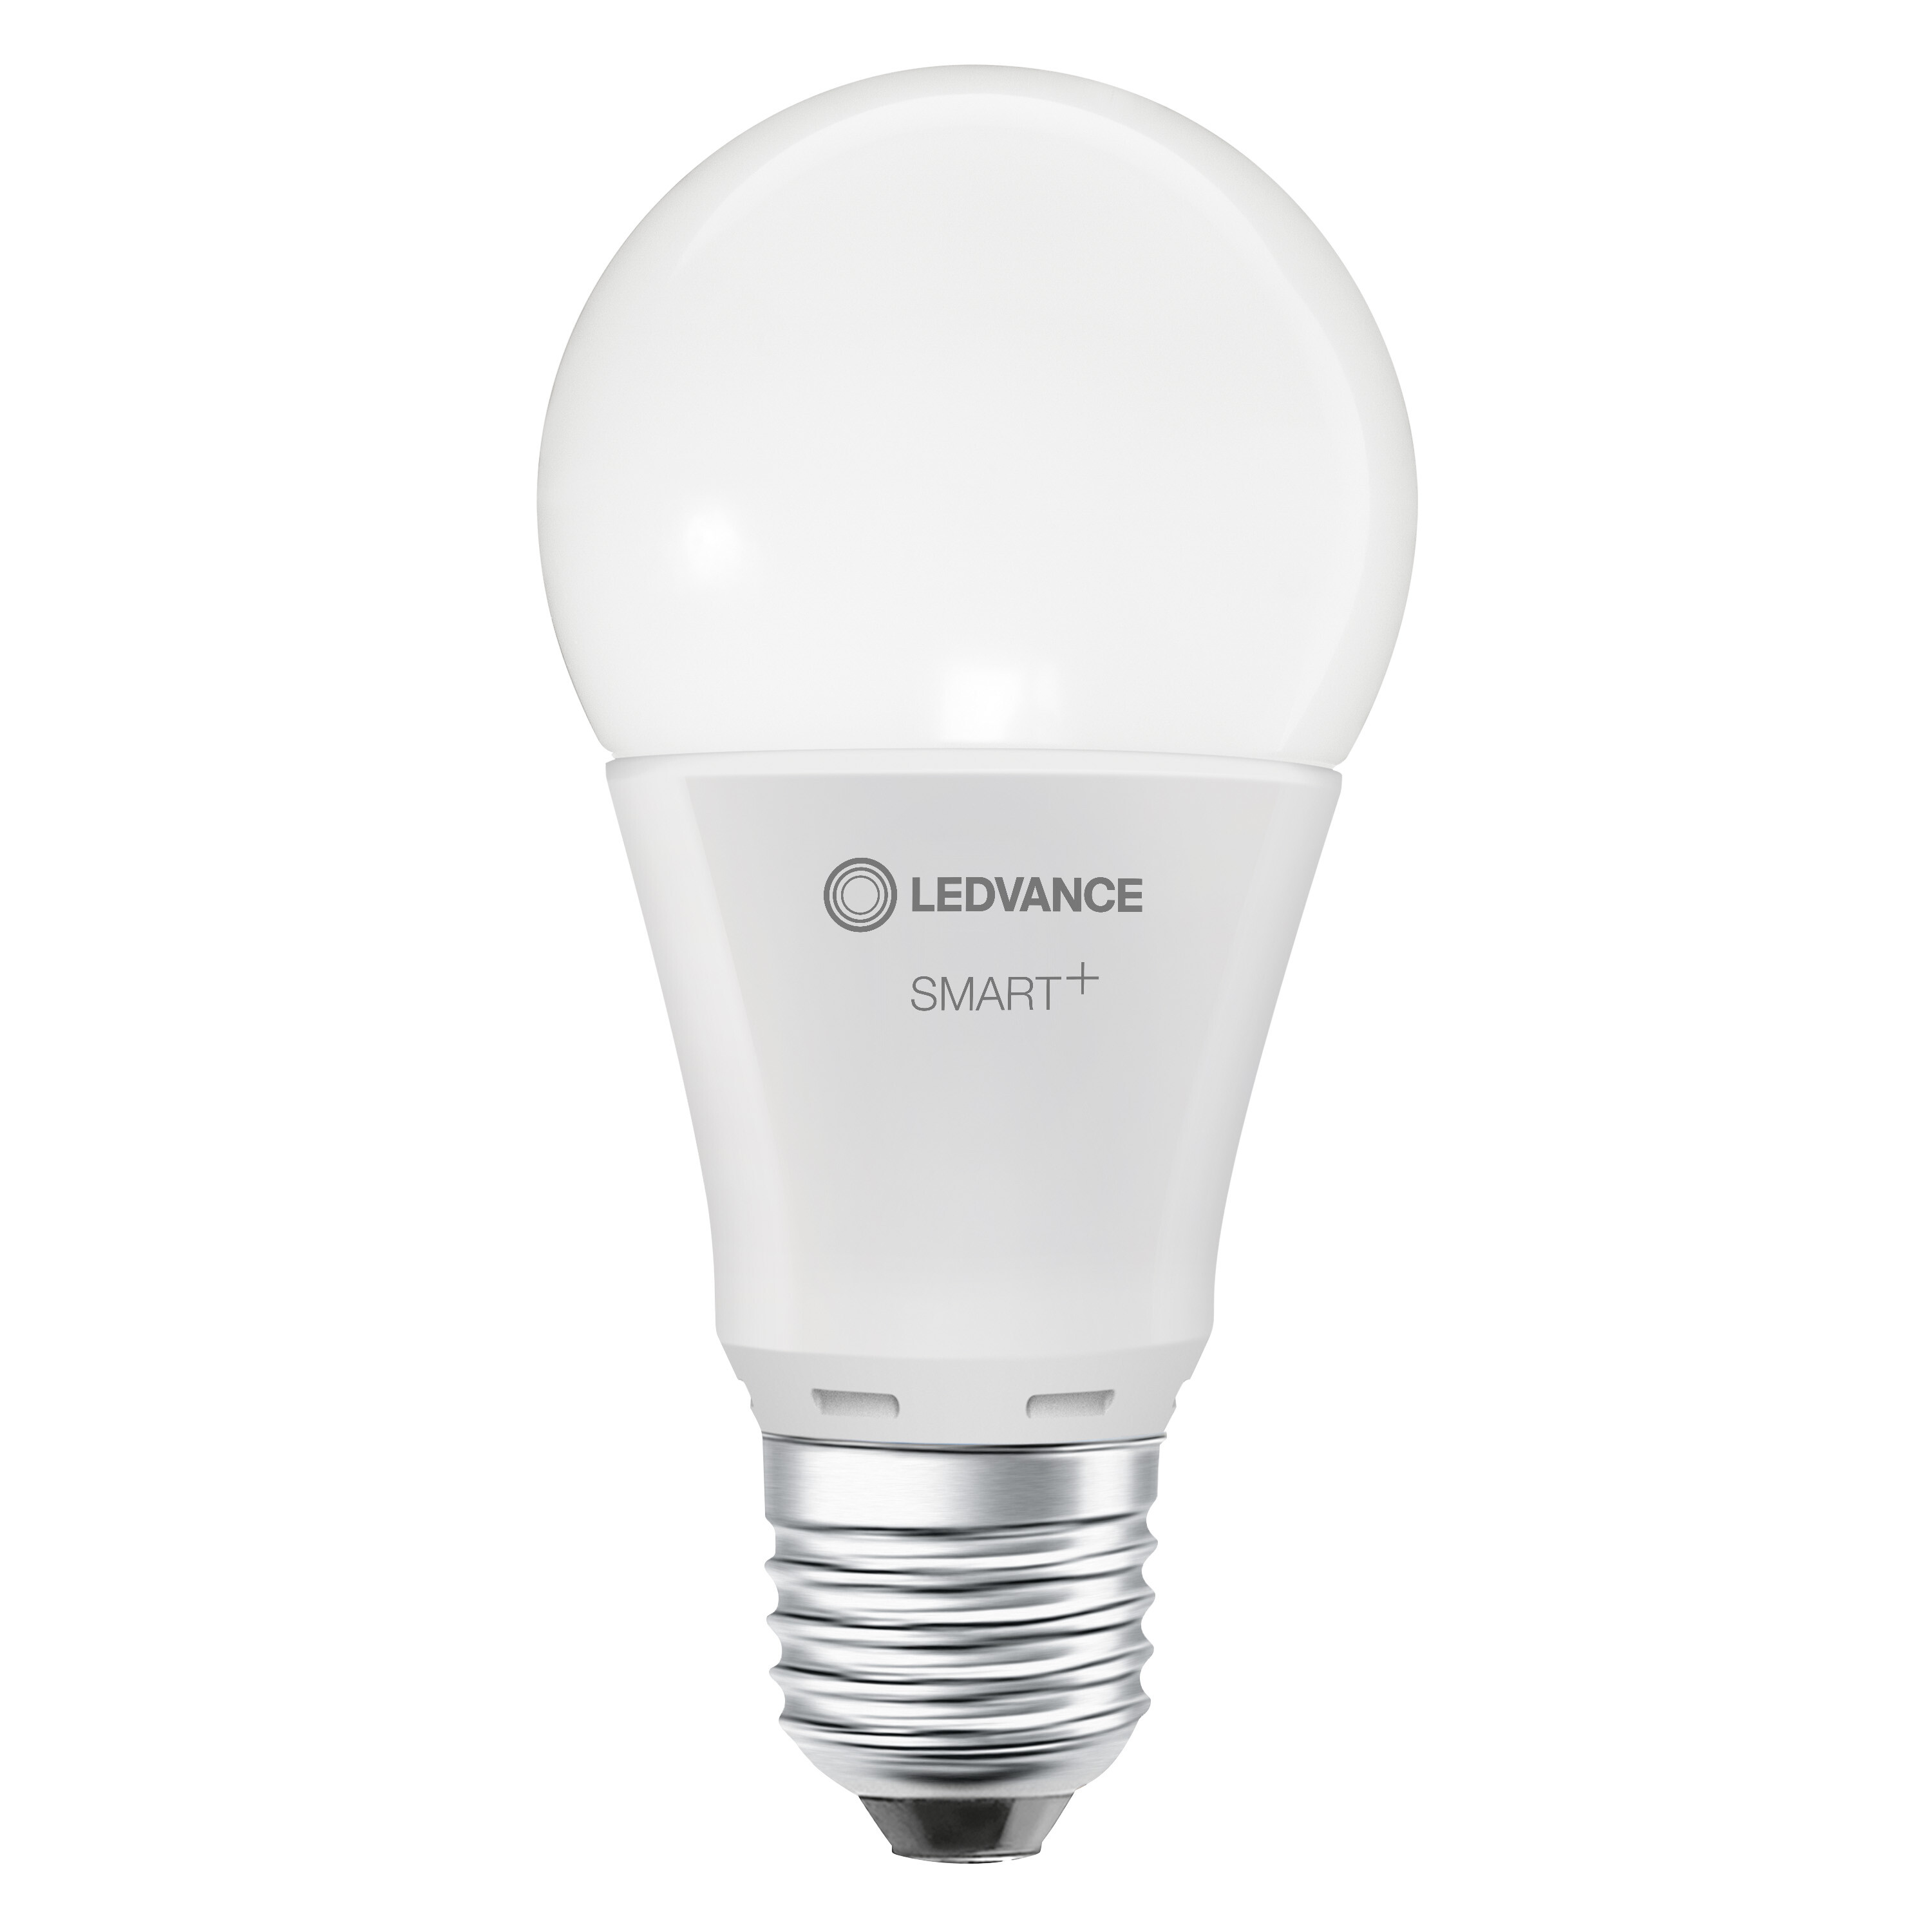 LEDVANCE SMART+ änderbar WiFi Tunable Classic Lichtfarbe LED Lampe White